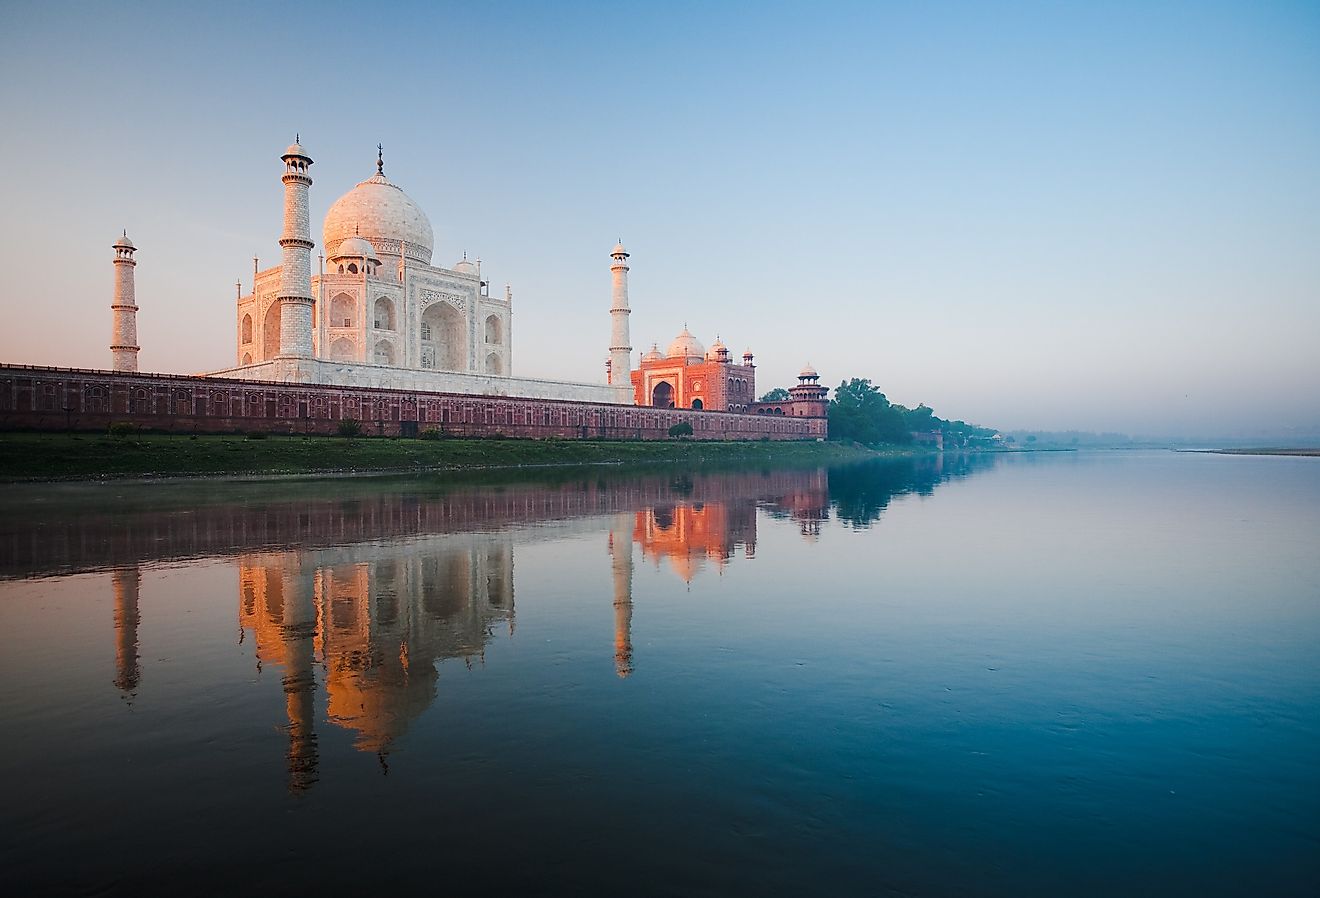 Sunrise at Taj Mahal in India on Jamuna River. Image credit Pius Lee via Adobe Stock.